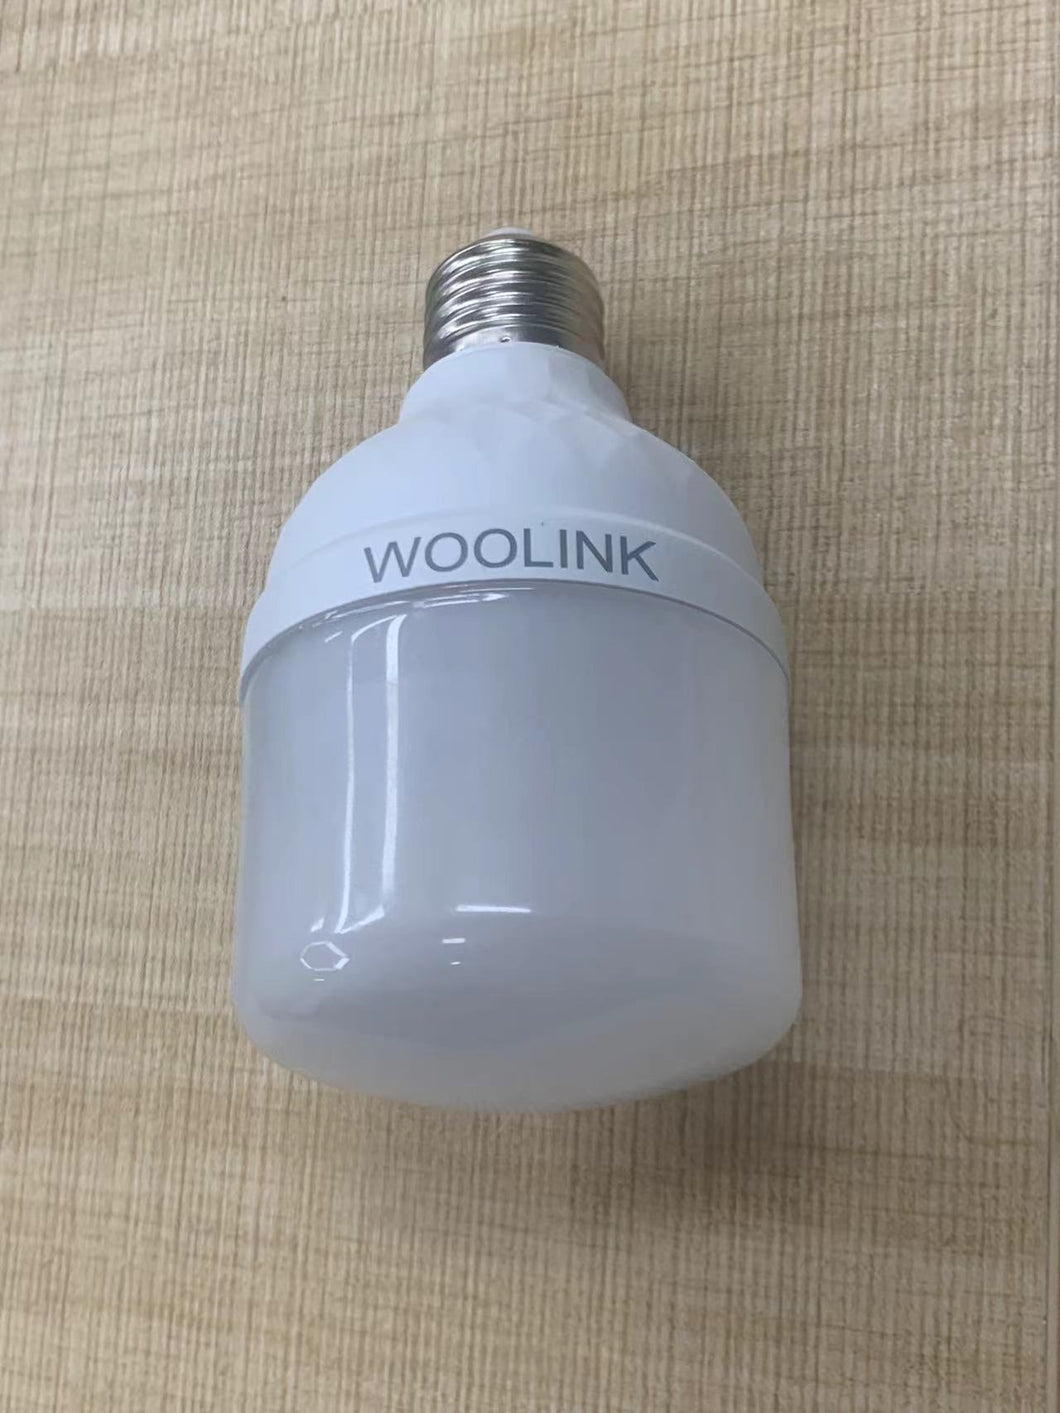 WOOLINK Wireless Camera, PTZ Light Bulb Camera